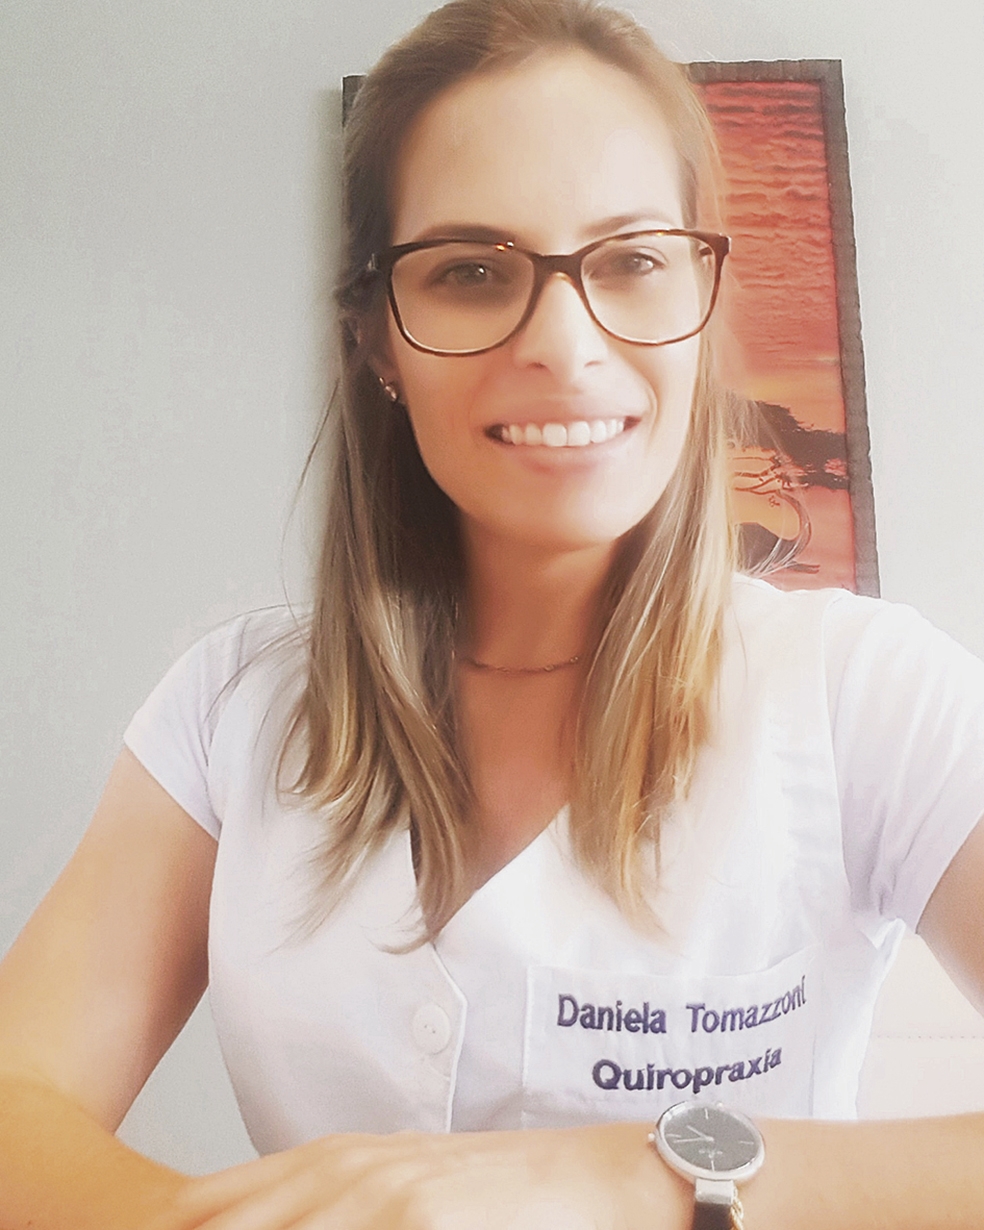 Quiropraxista Daniela Tomazzoni. - Divulgação